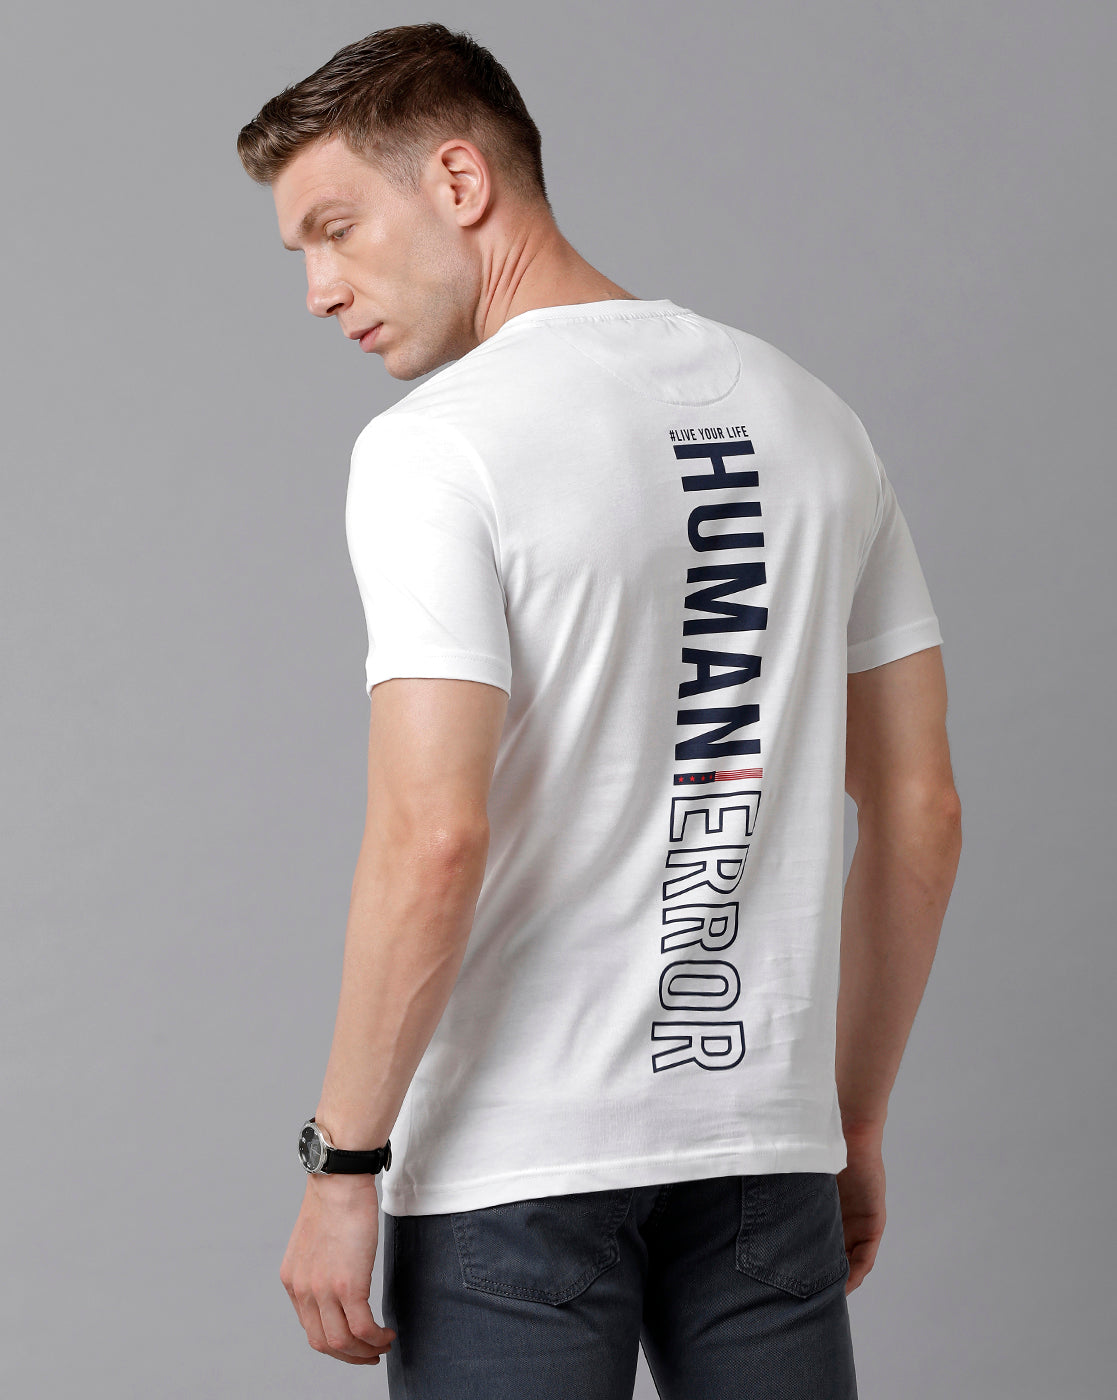 CP BRO Men's Cotton Printed Half Sleeve Slim Fit Round Neck White Color T-Shirt | Brcn - 486 B